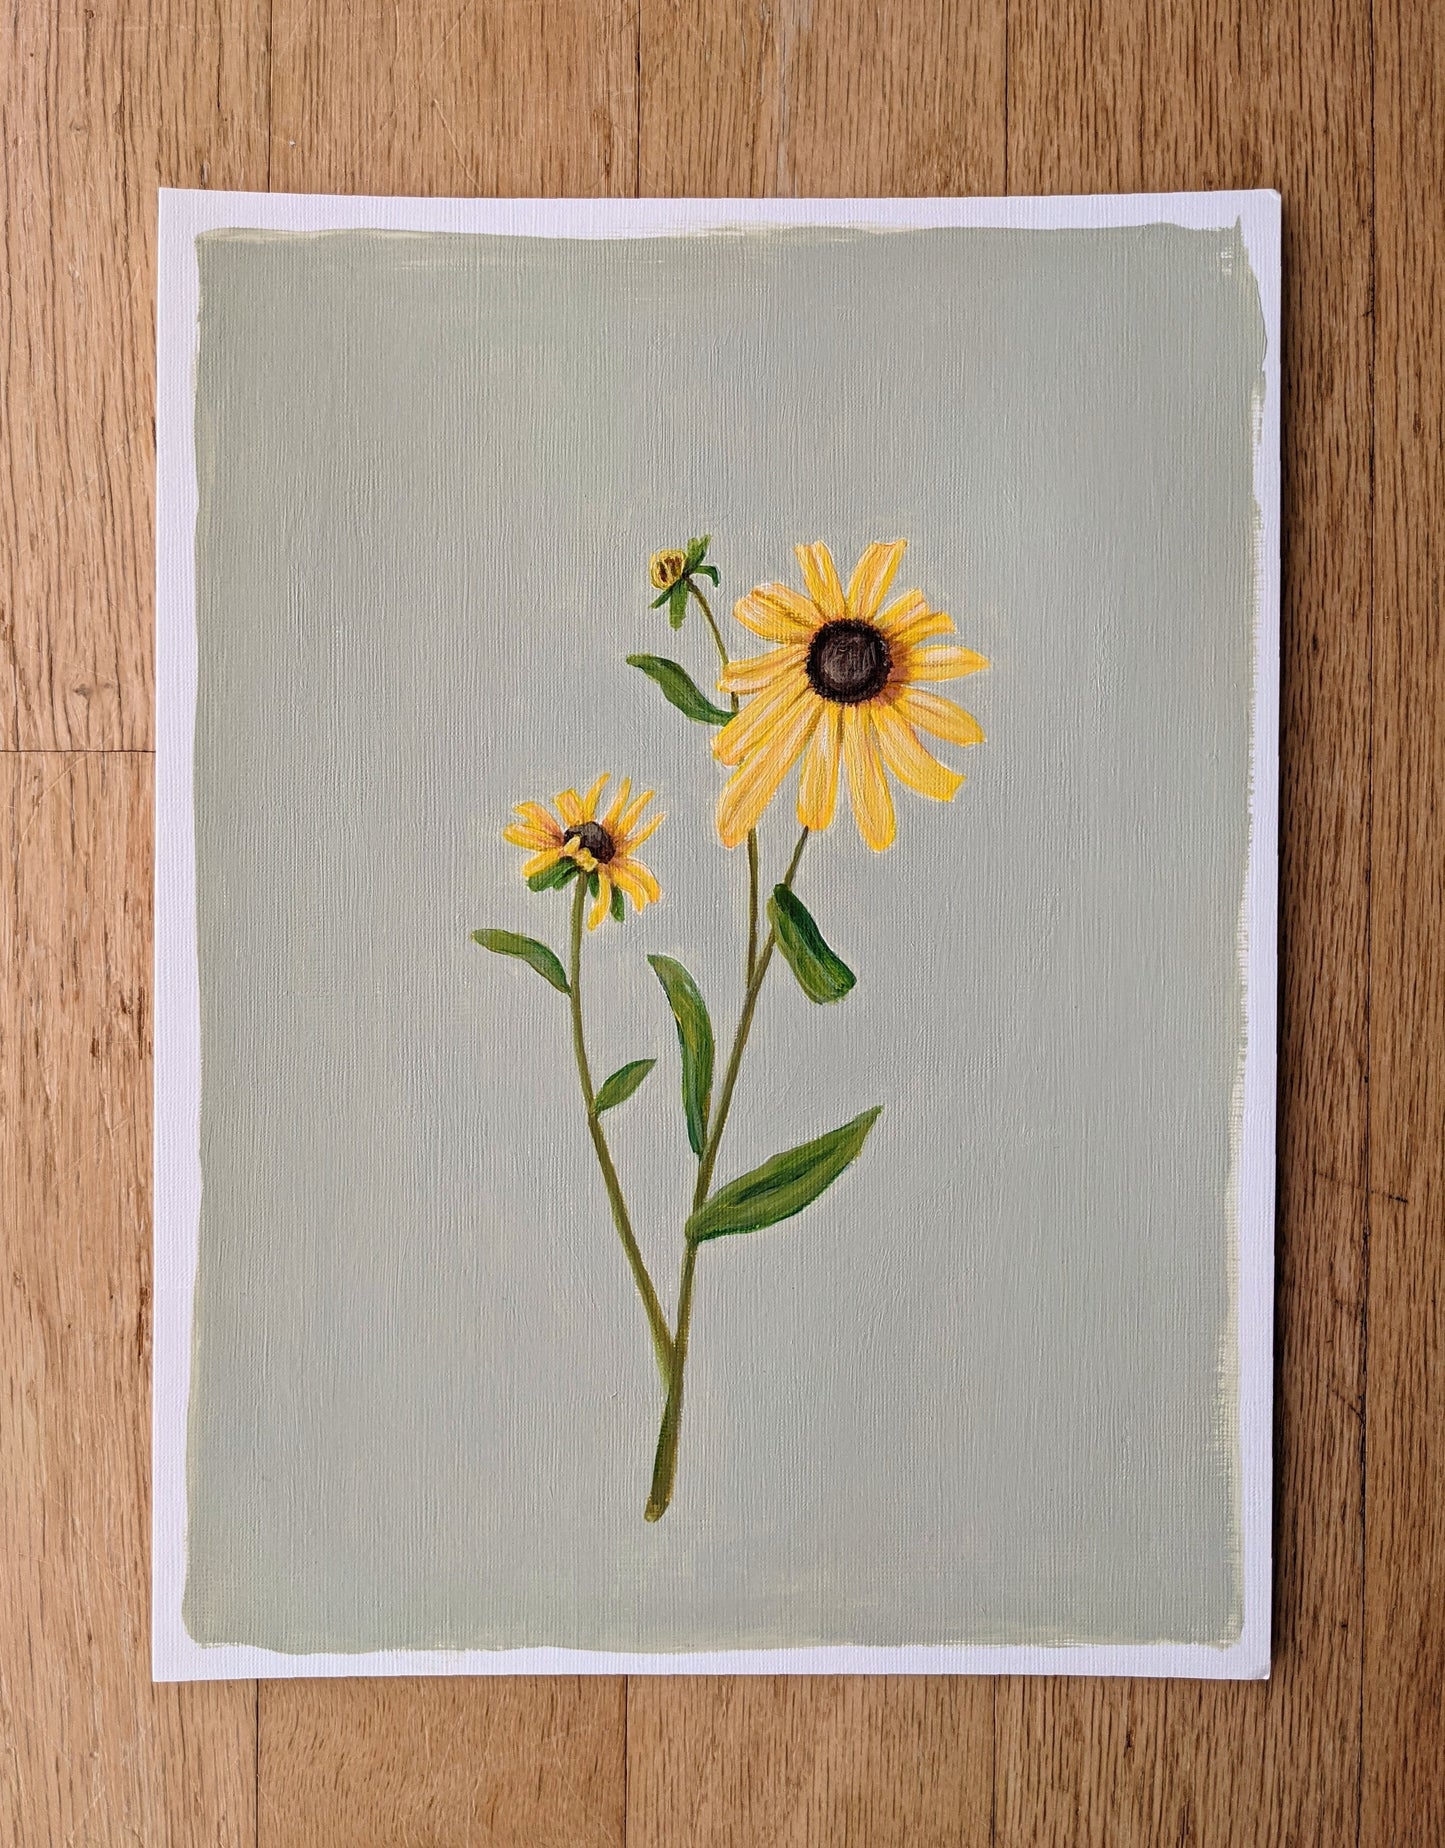 Day 17 Yellow Flower | 9X12 inch original painting